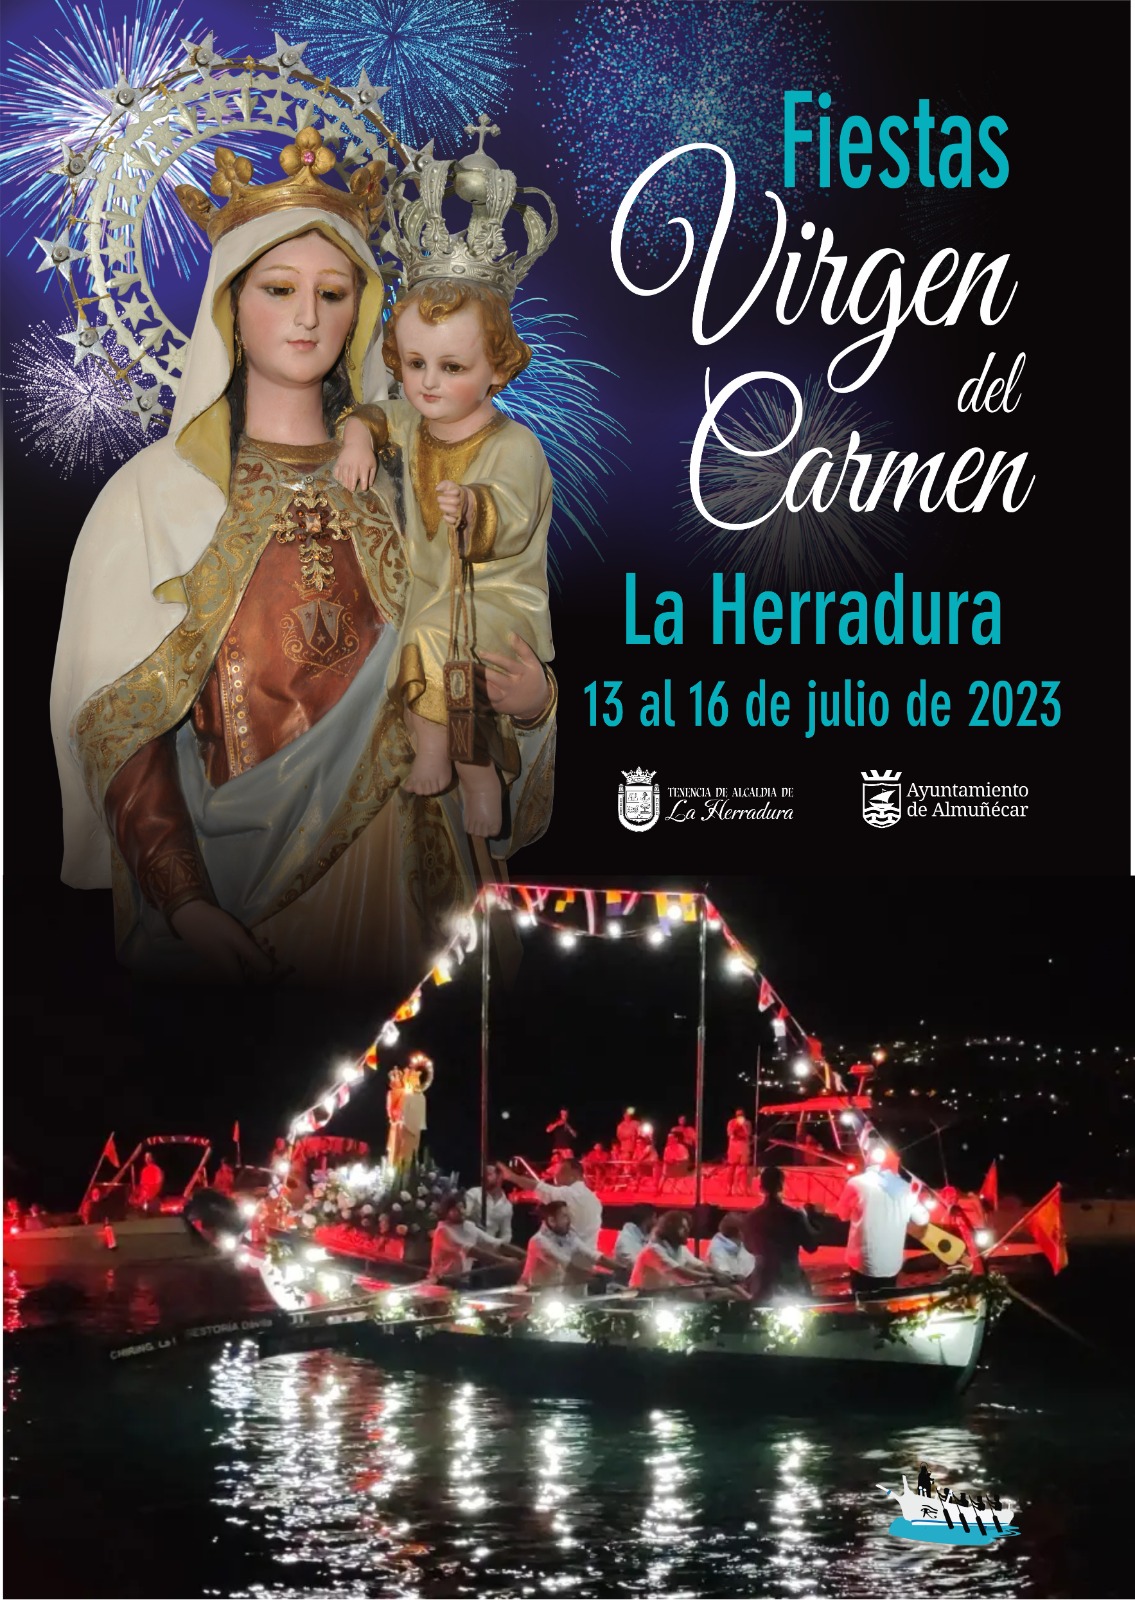 Fiestas Virgen del Carmen en La Herradura